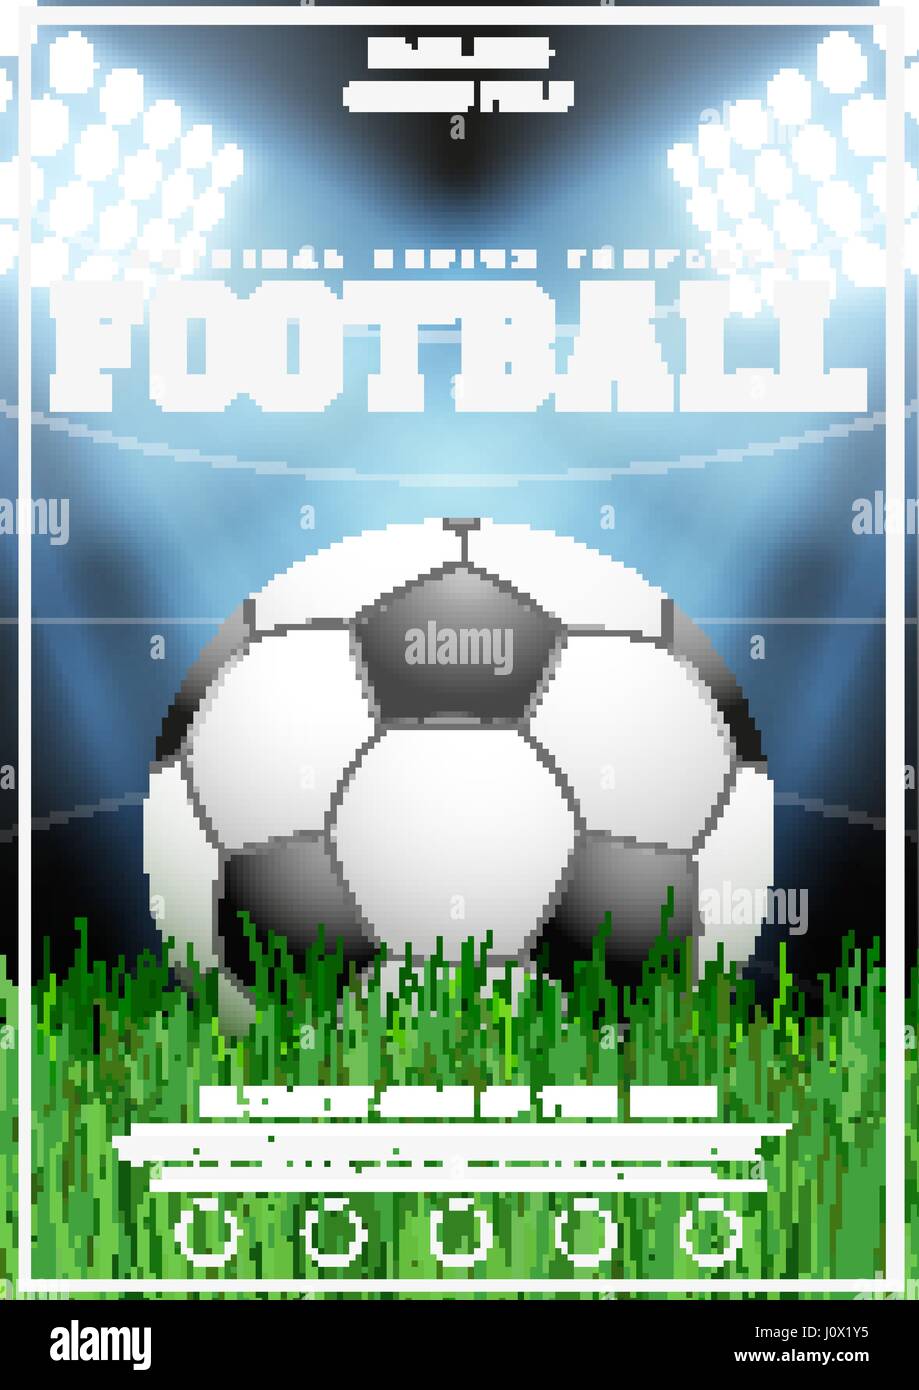 Plakat Vorlage Fur Fussball Turnier Stock Vektorgrafik Alamy